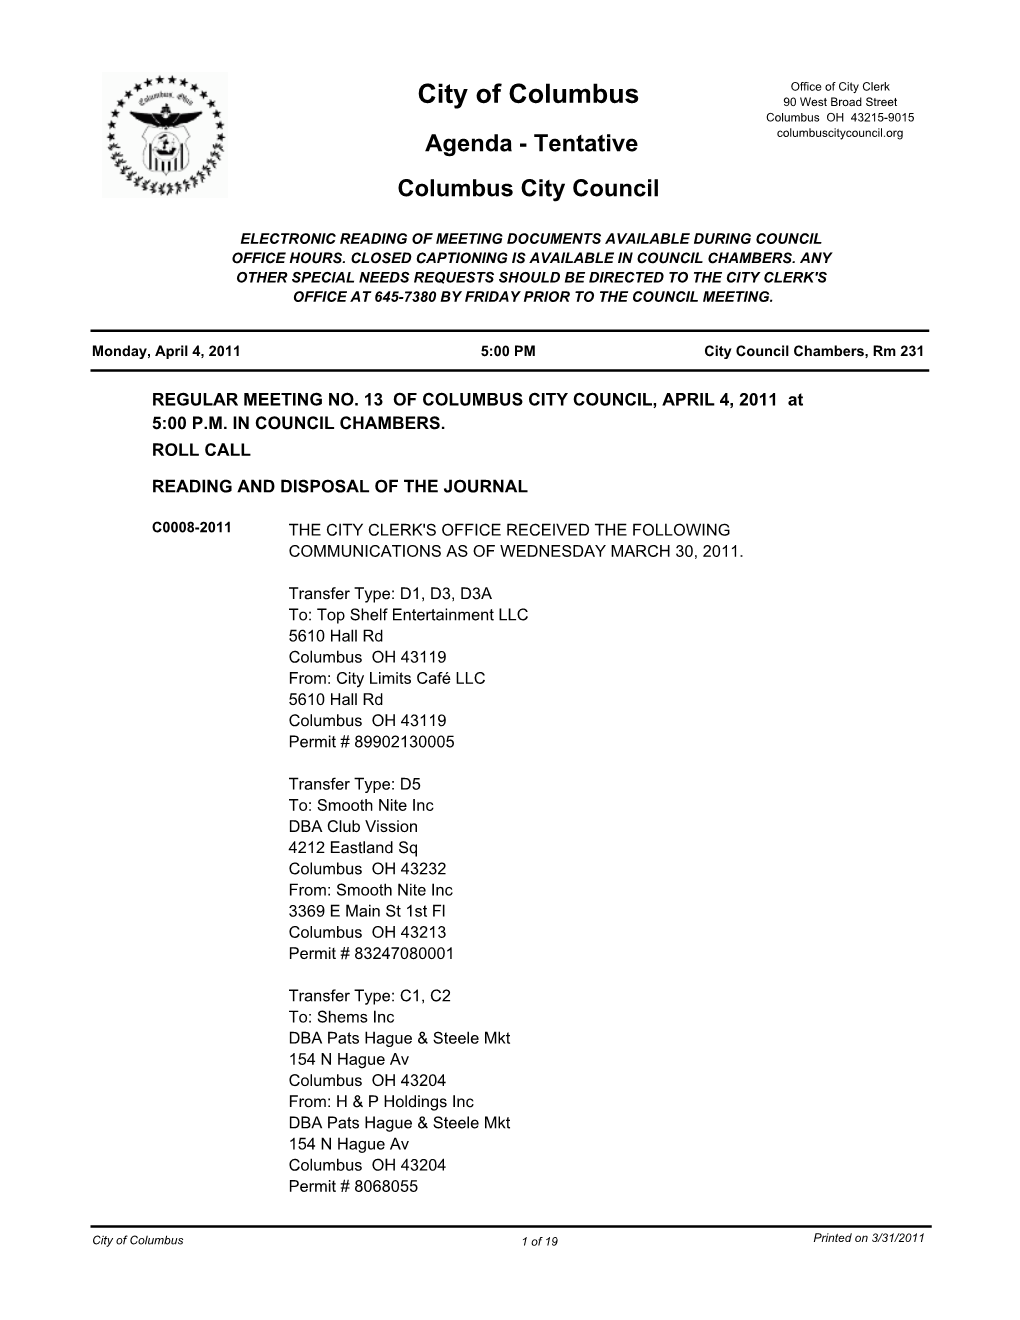 City of Columbus 90 West Broad Street Columbus OH 43215-9015 Agenda - Tentative Columbuscitycouncil.Org Columbus City Council